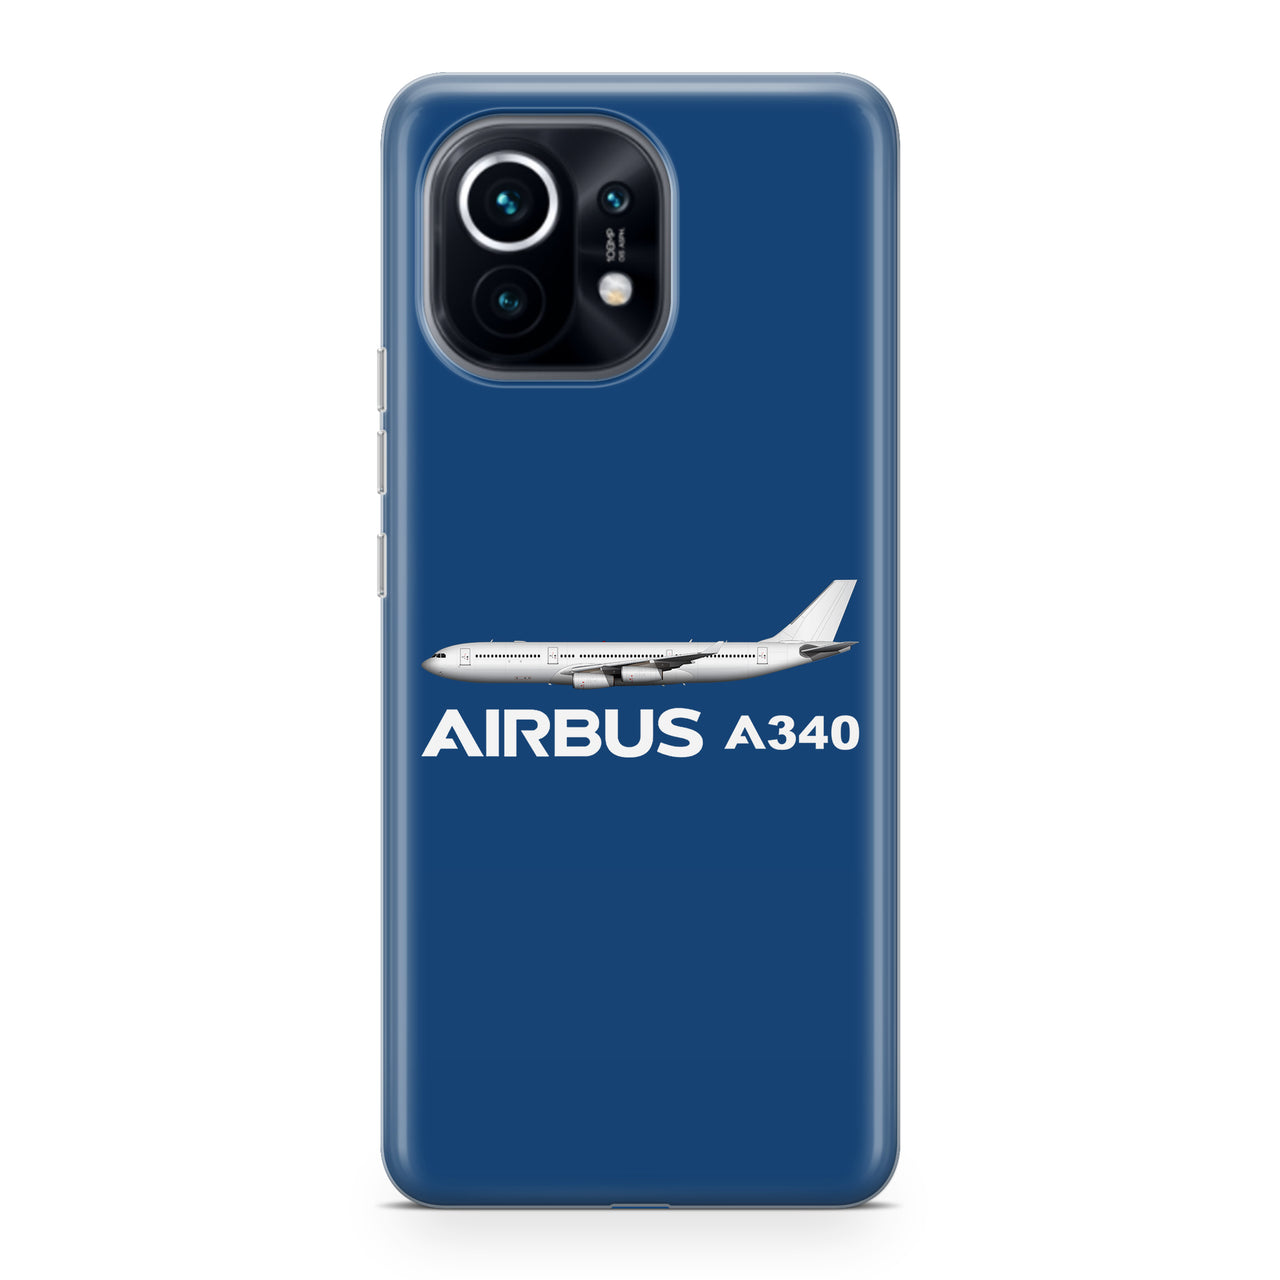 The Airbus A340 Designed Xiaomi Cases